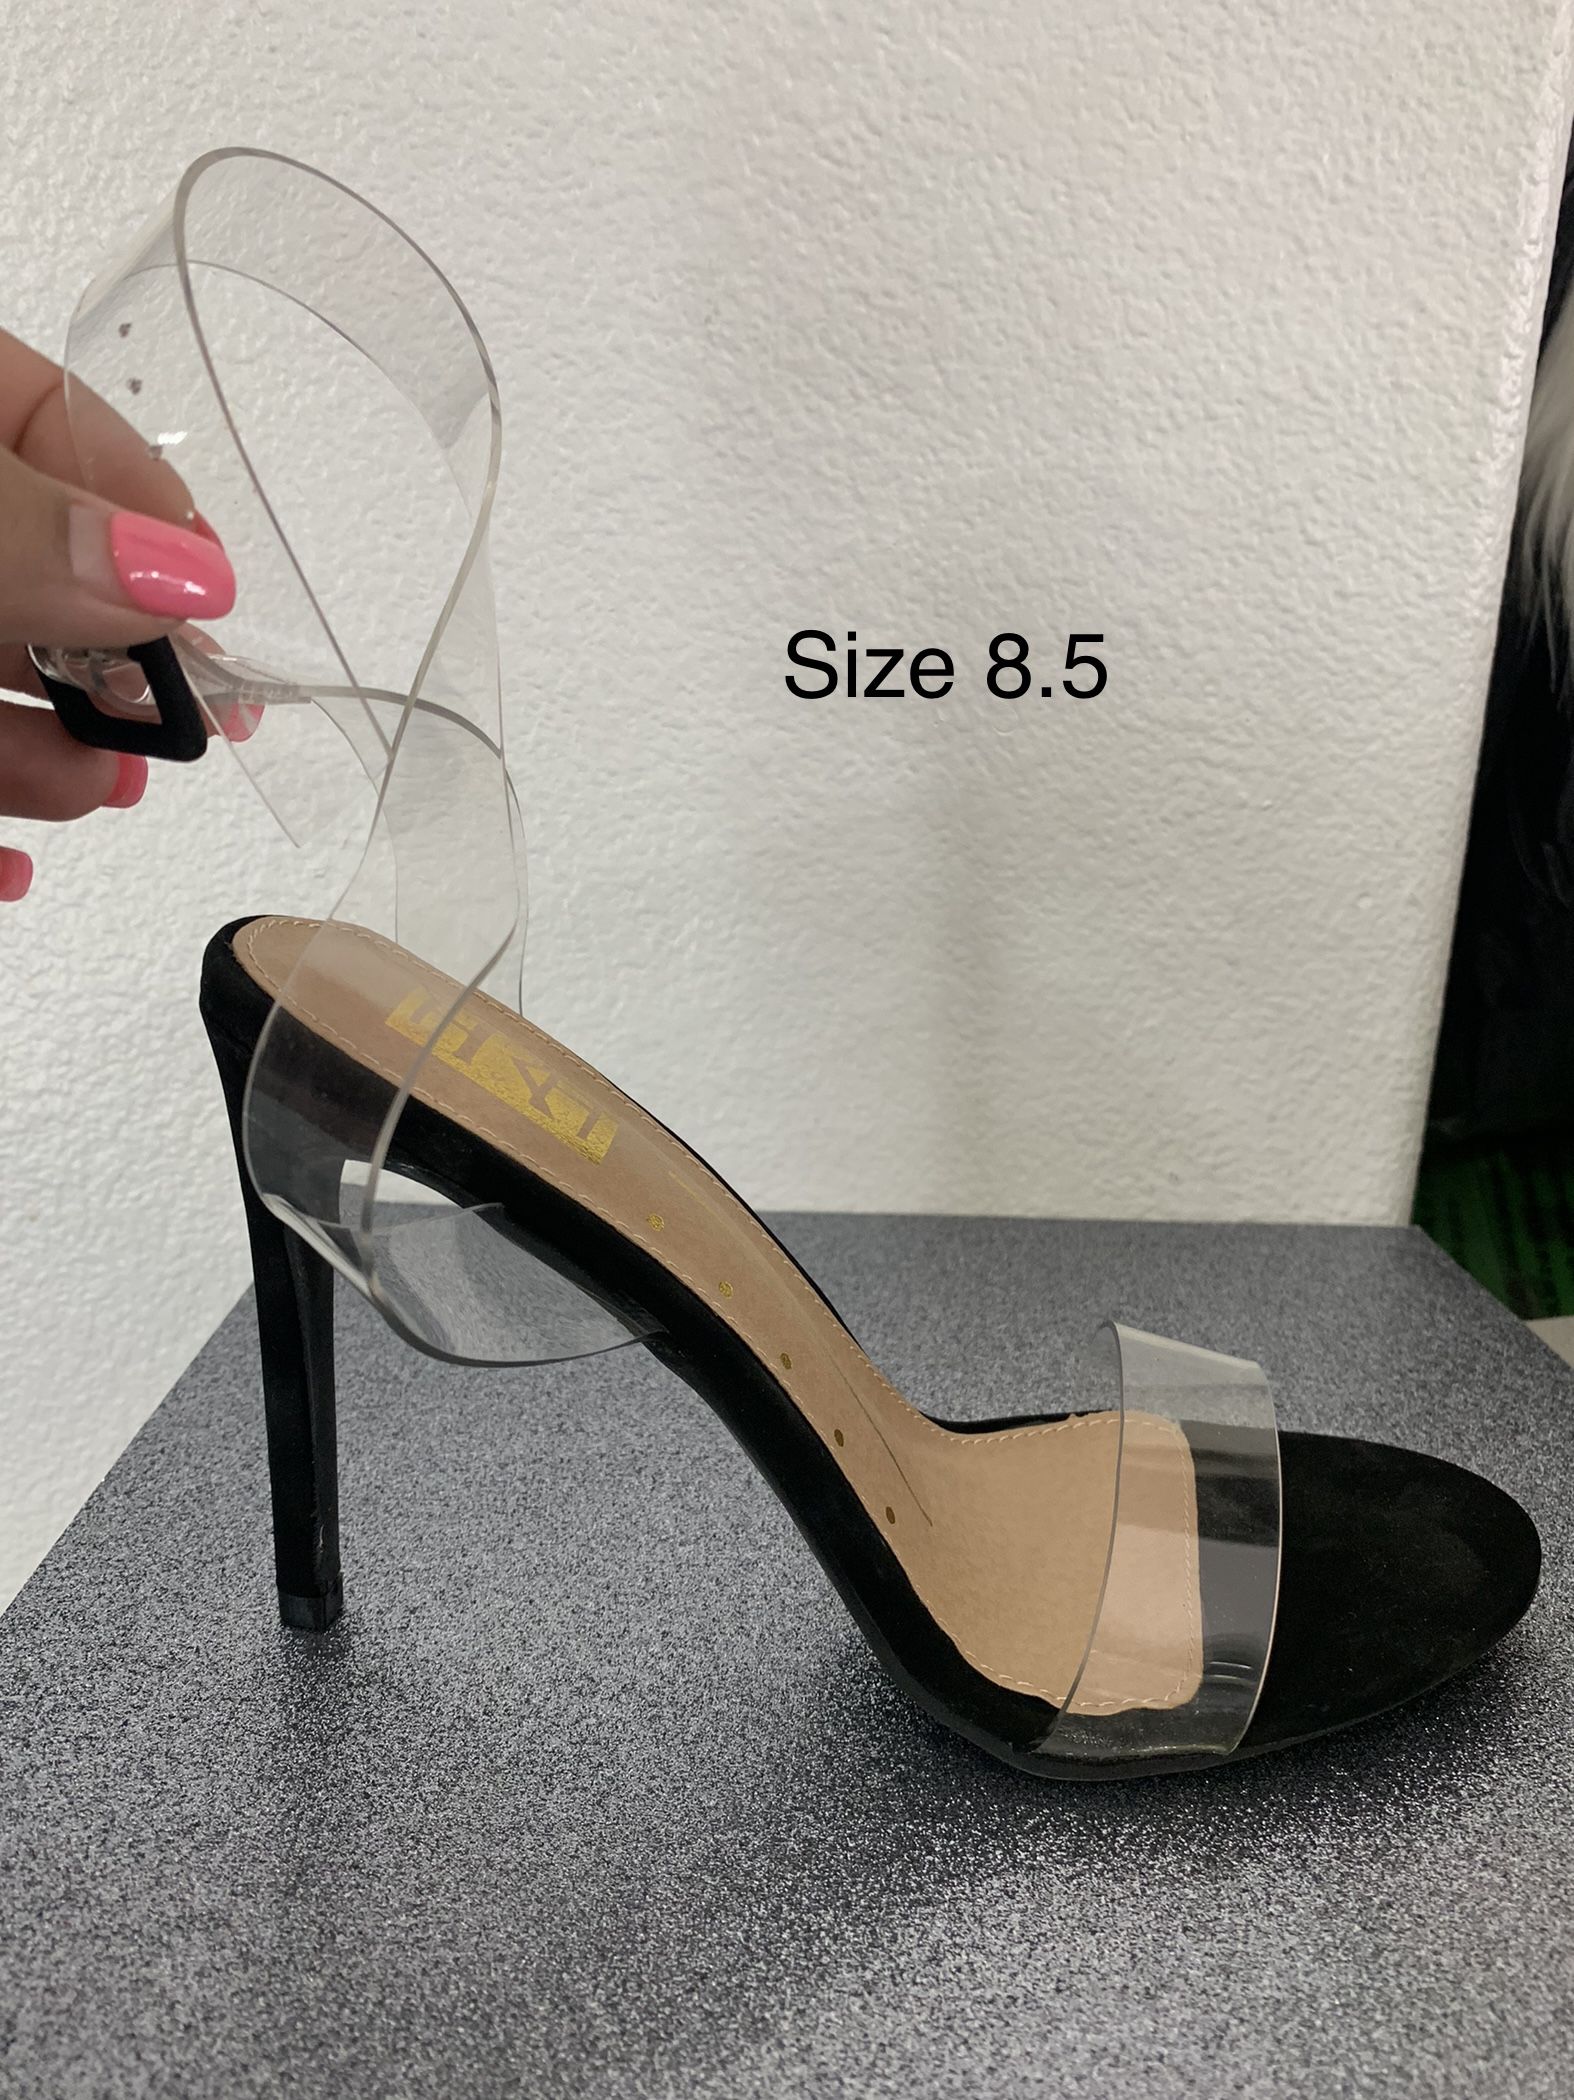 Brand New Heels Size 8.5